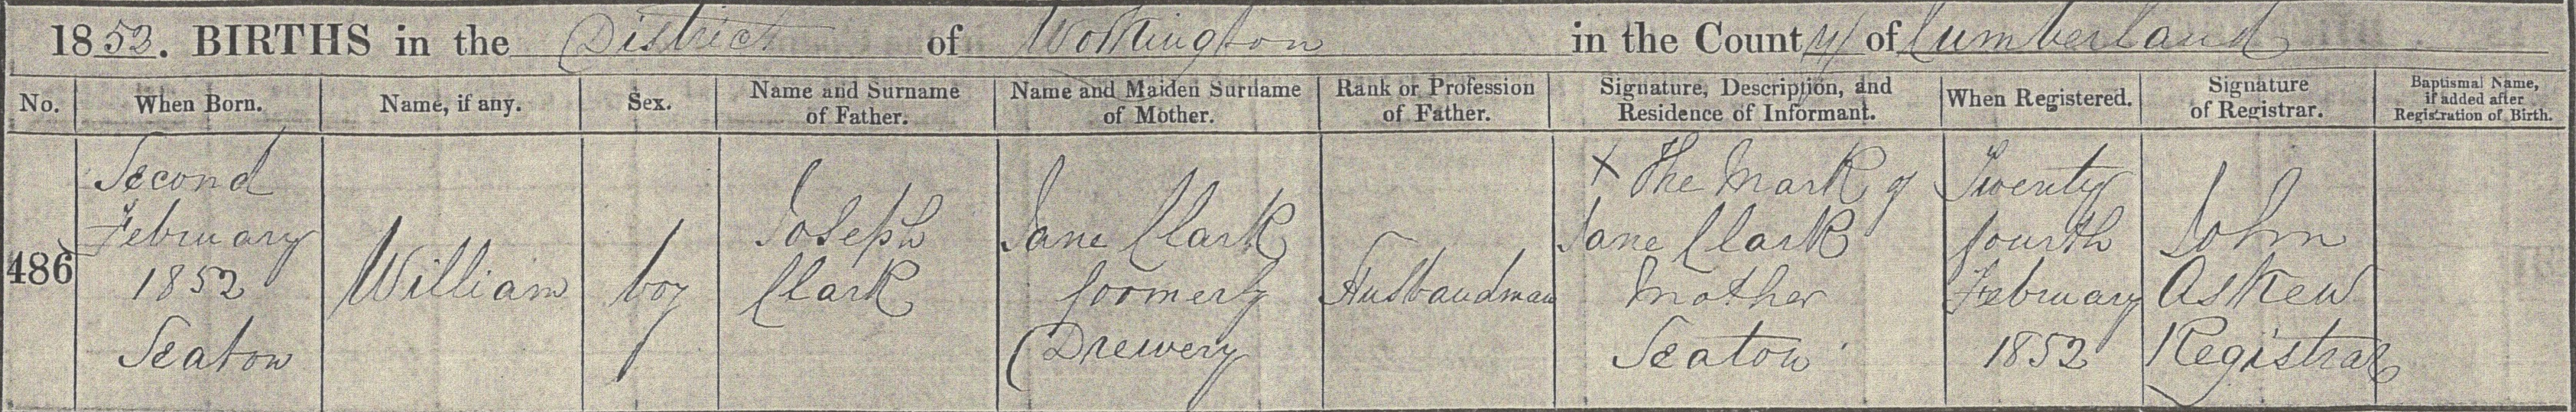 William Clark Birth Certificate 1852